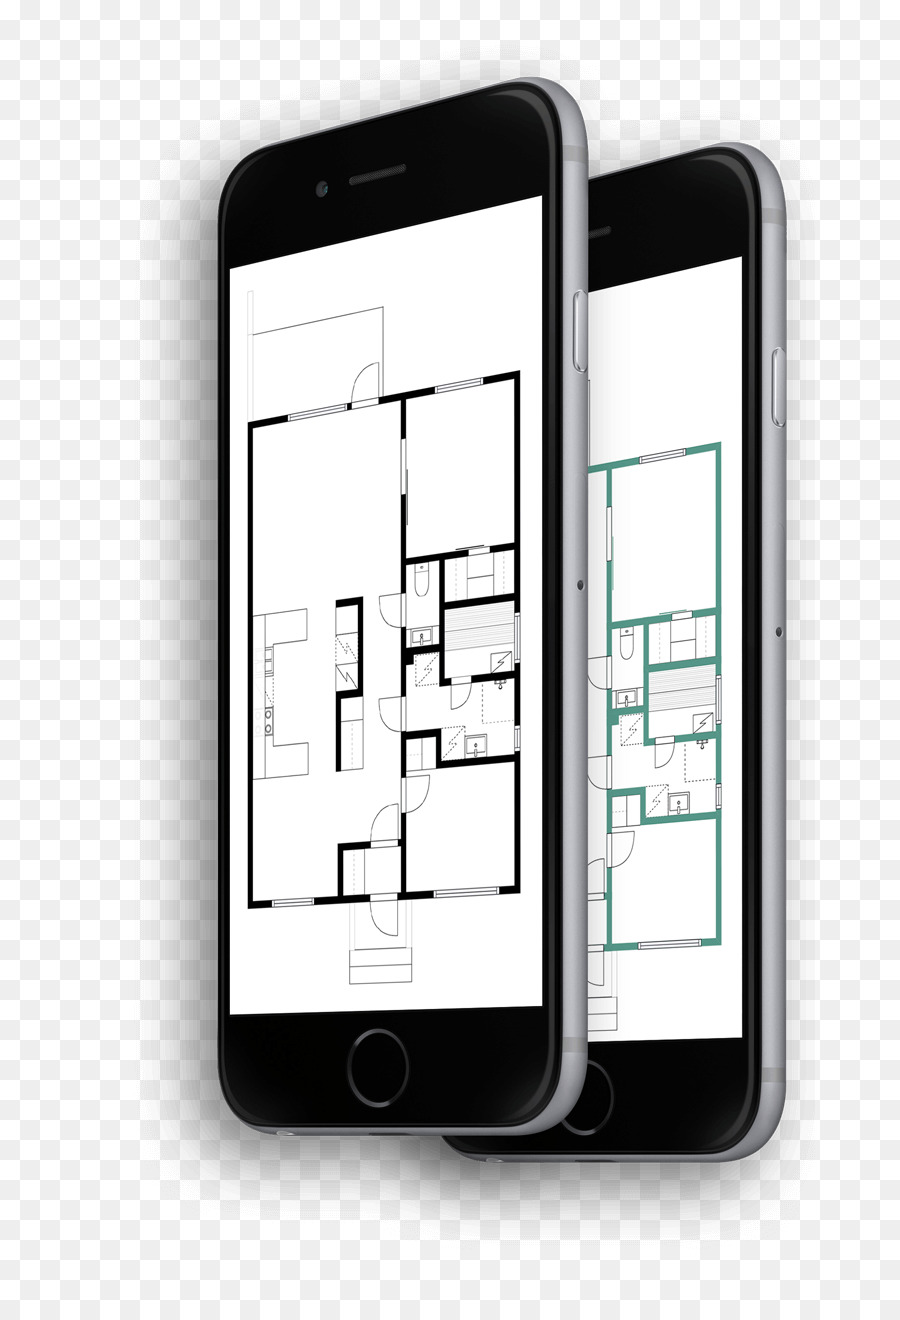 Feature phone House plan-Starter-home - schwarzer Boden